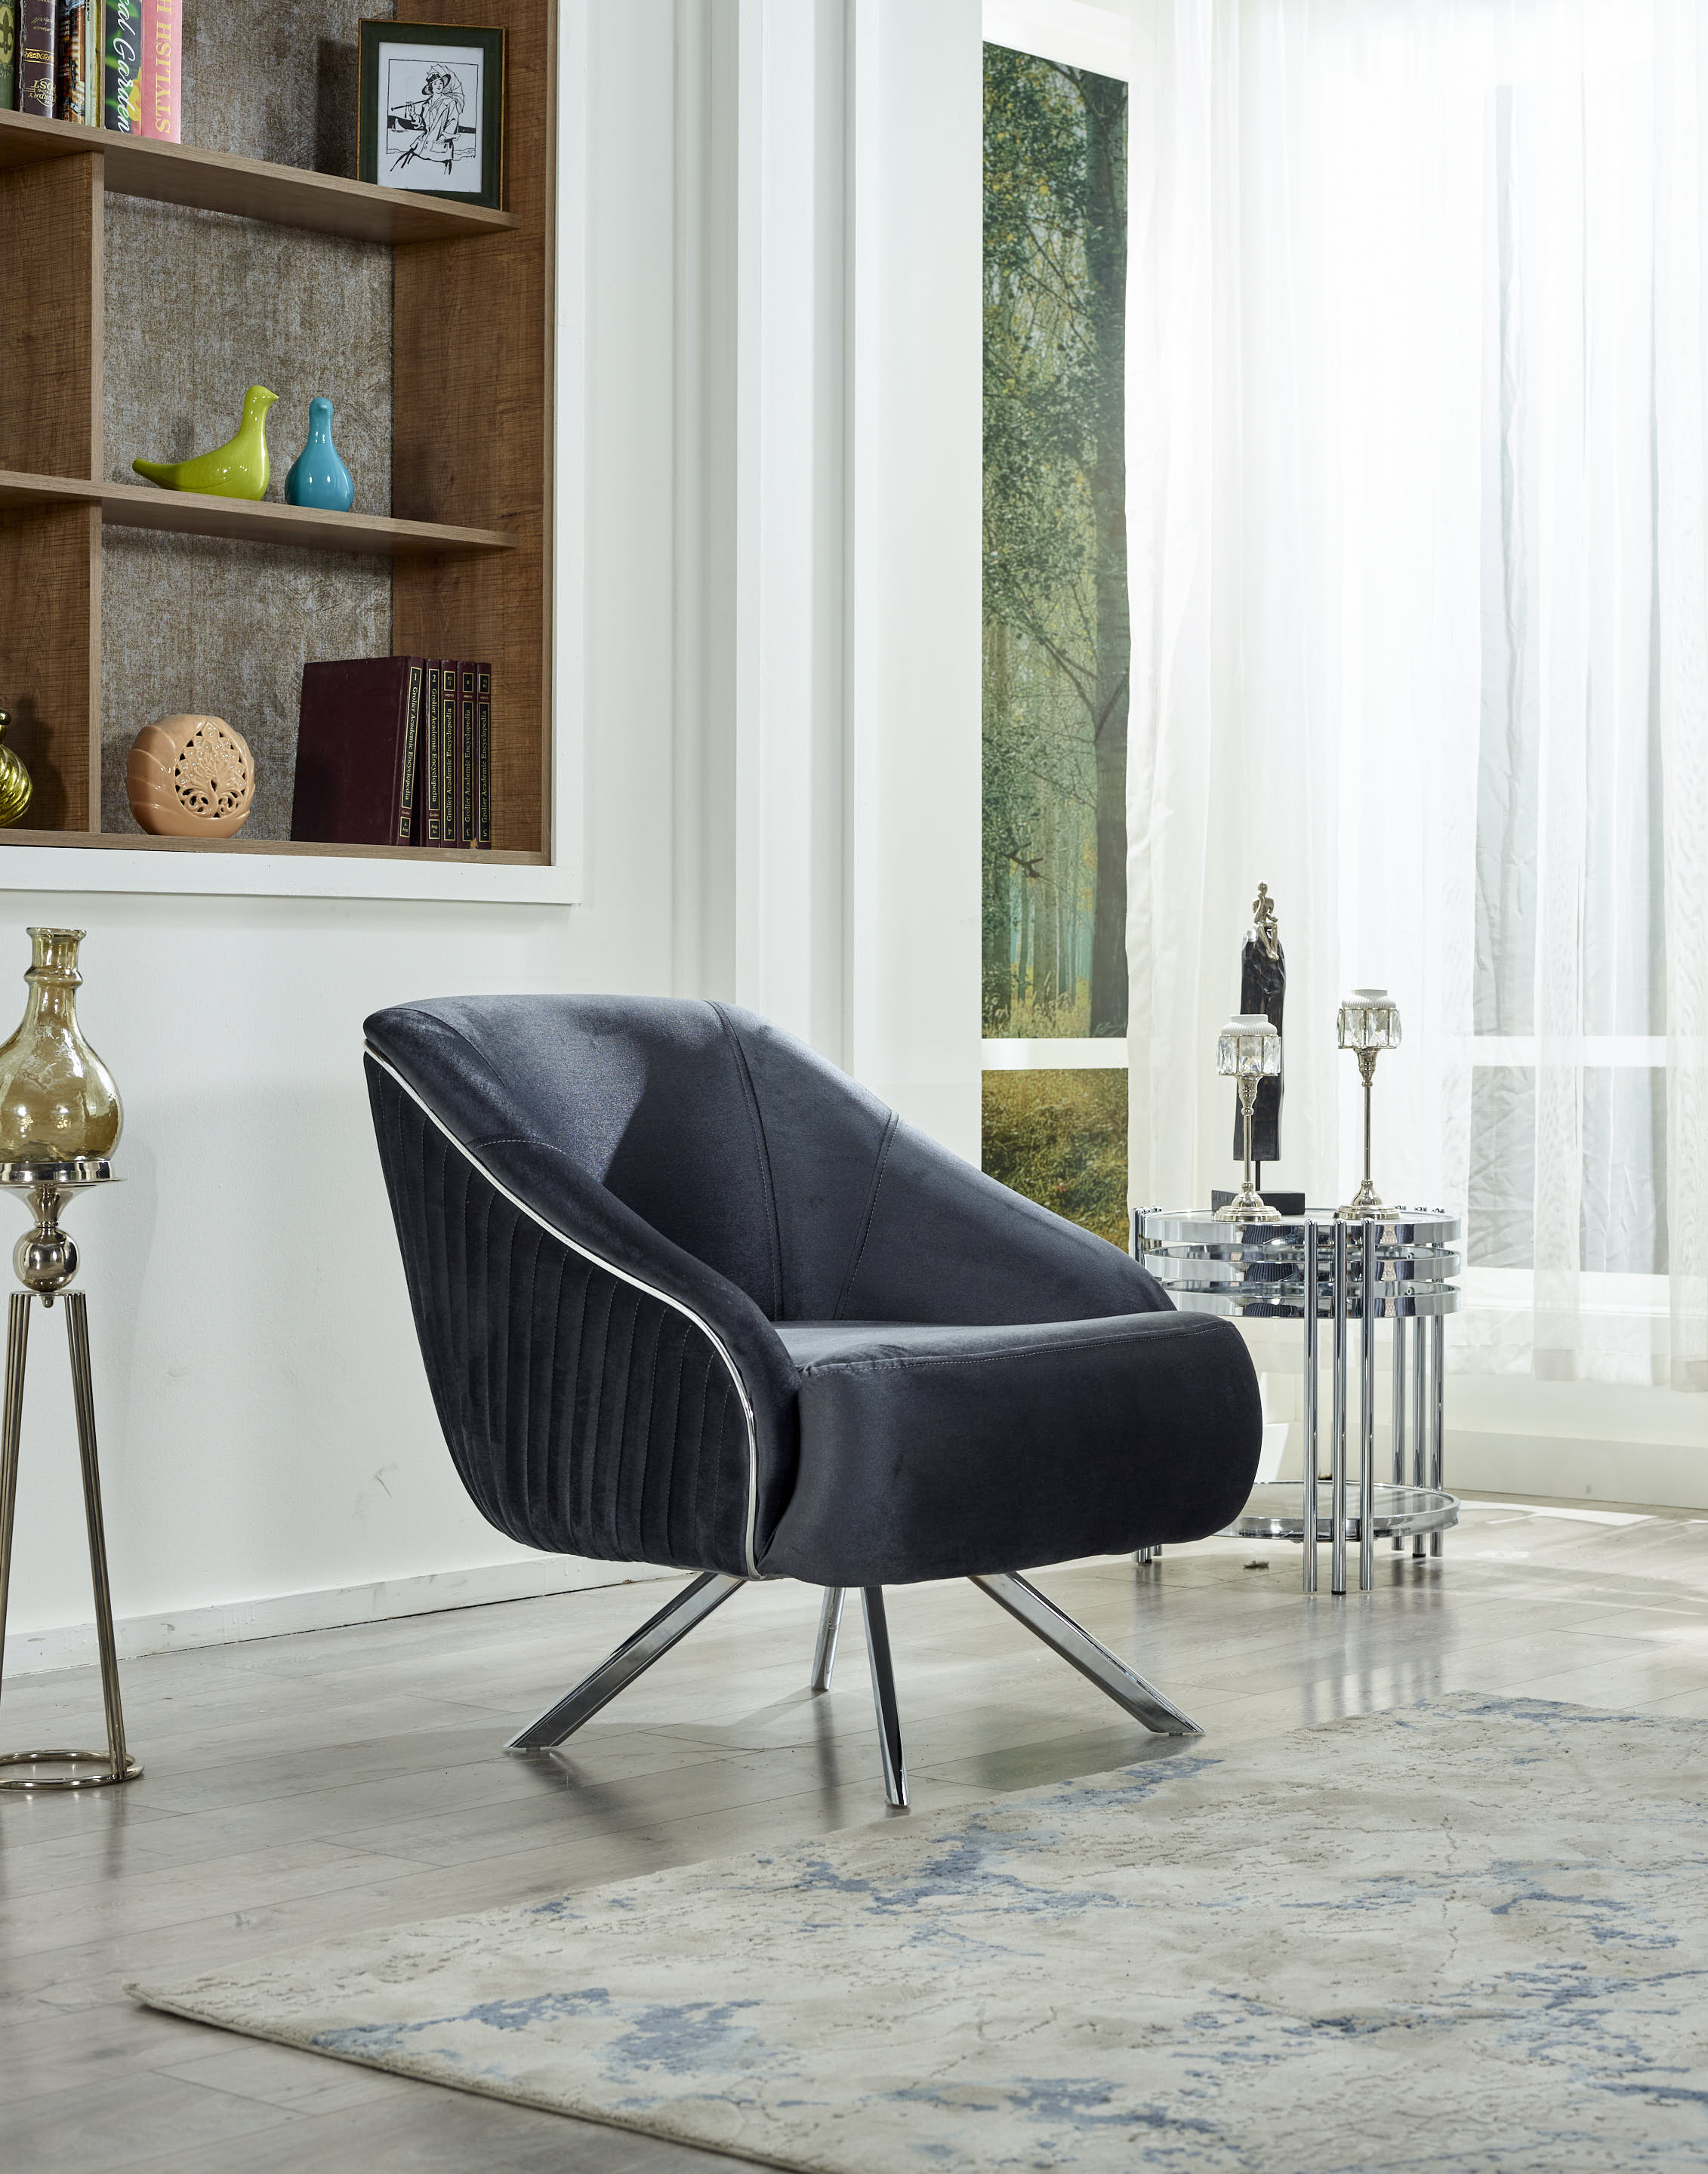 Lucas Stationary Livingroom (1 Sofa & 1 Loveseat & 1 Chair) Dark Grey